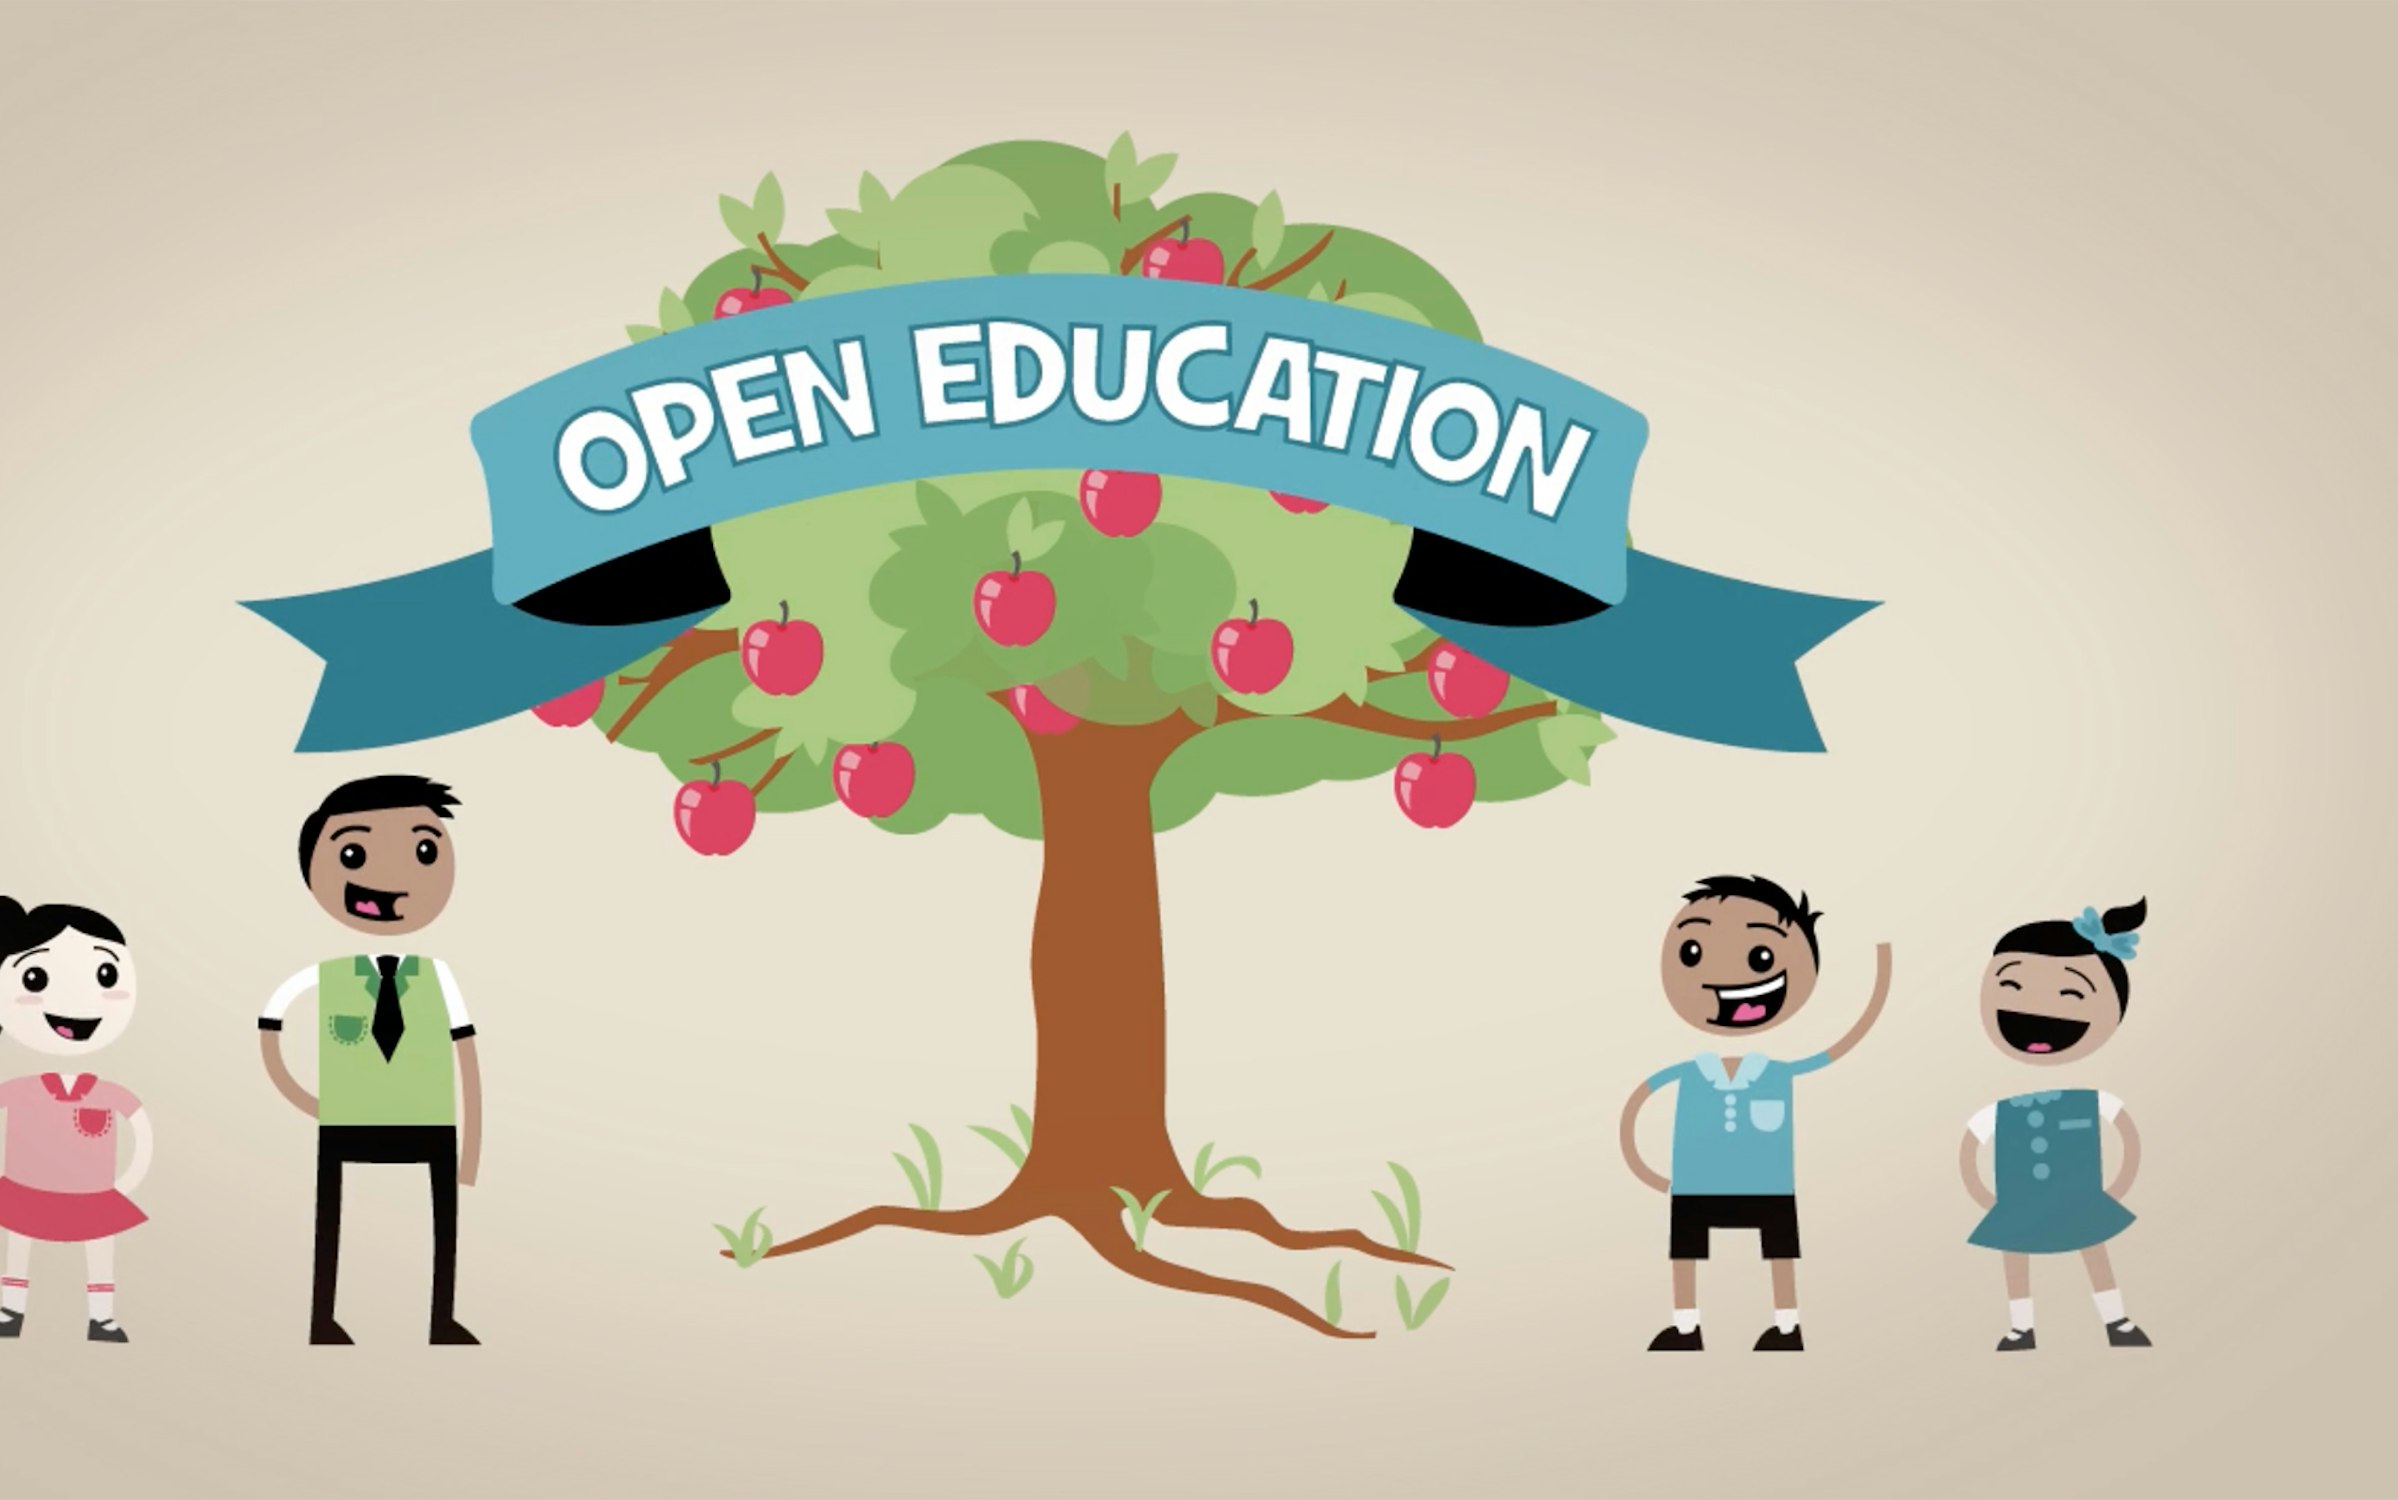 open training & education network